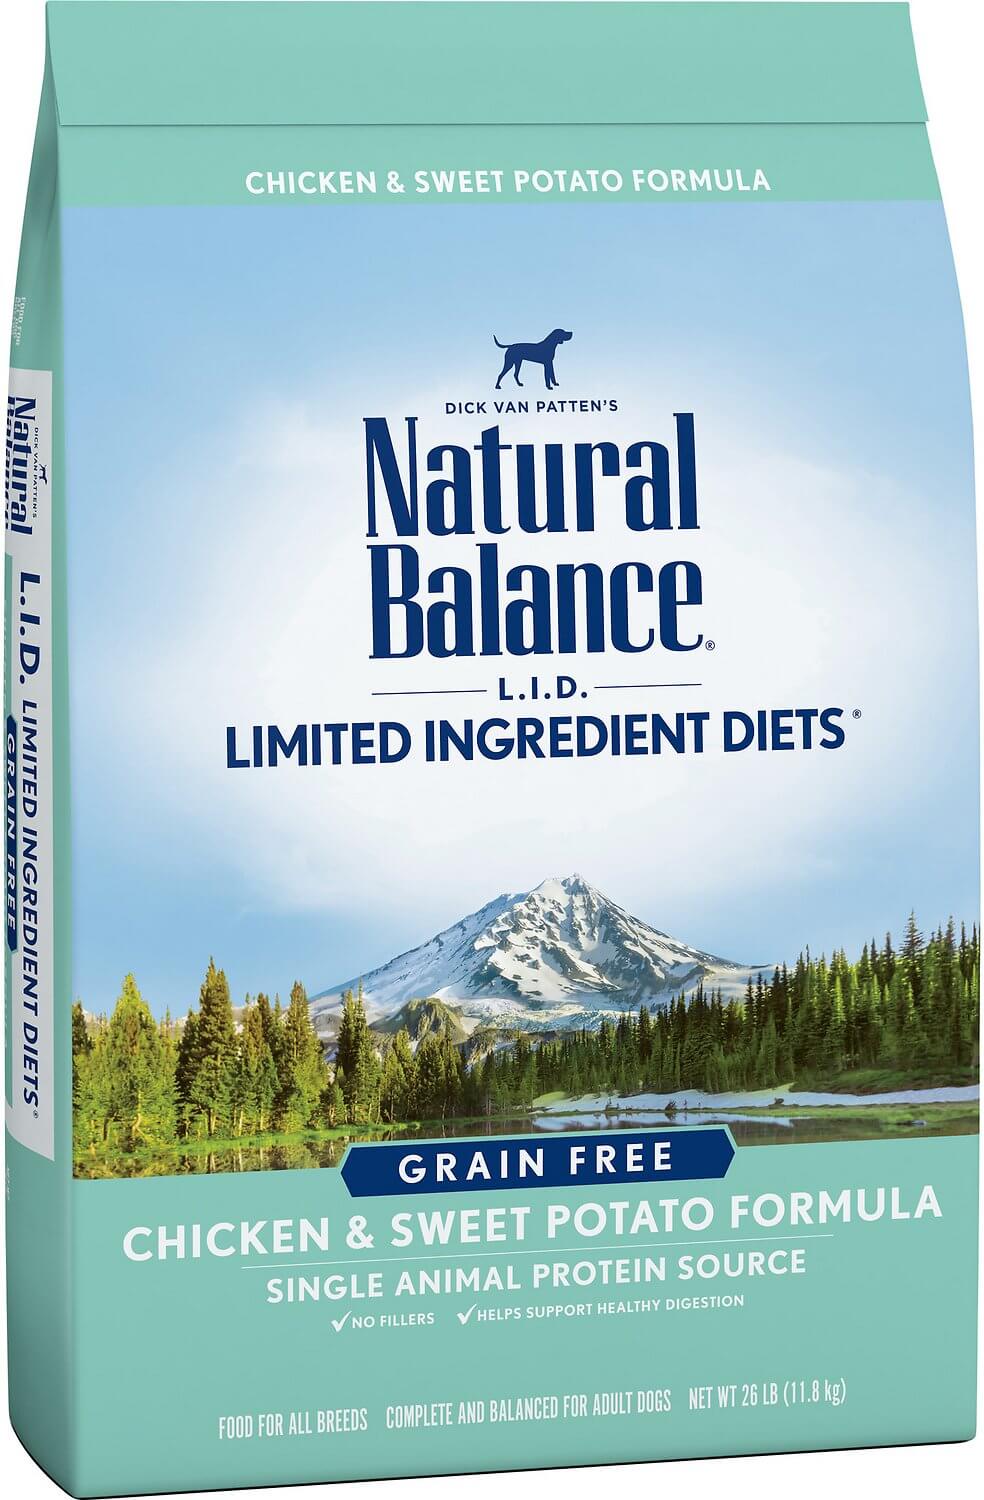 Natural Balance Dog Food Review Rating Recalls